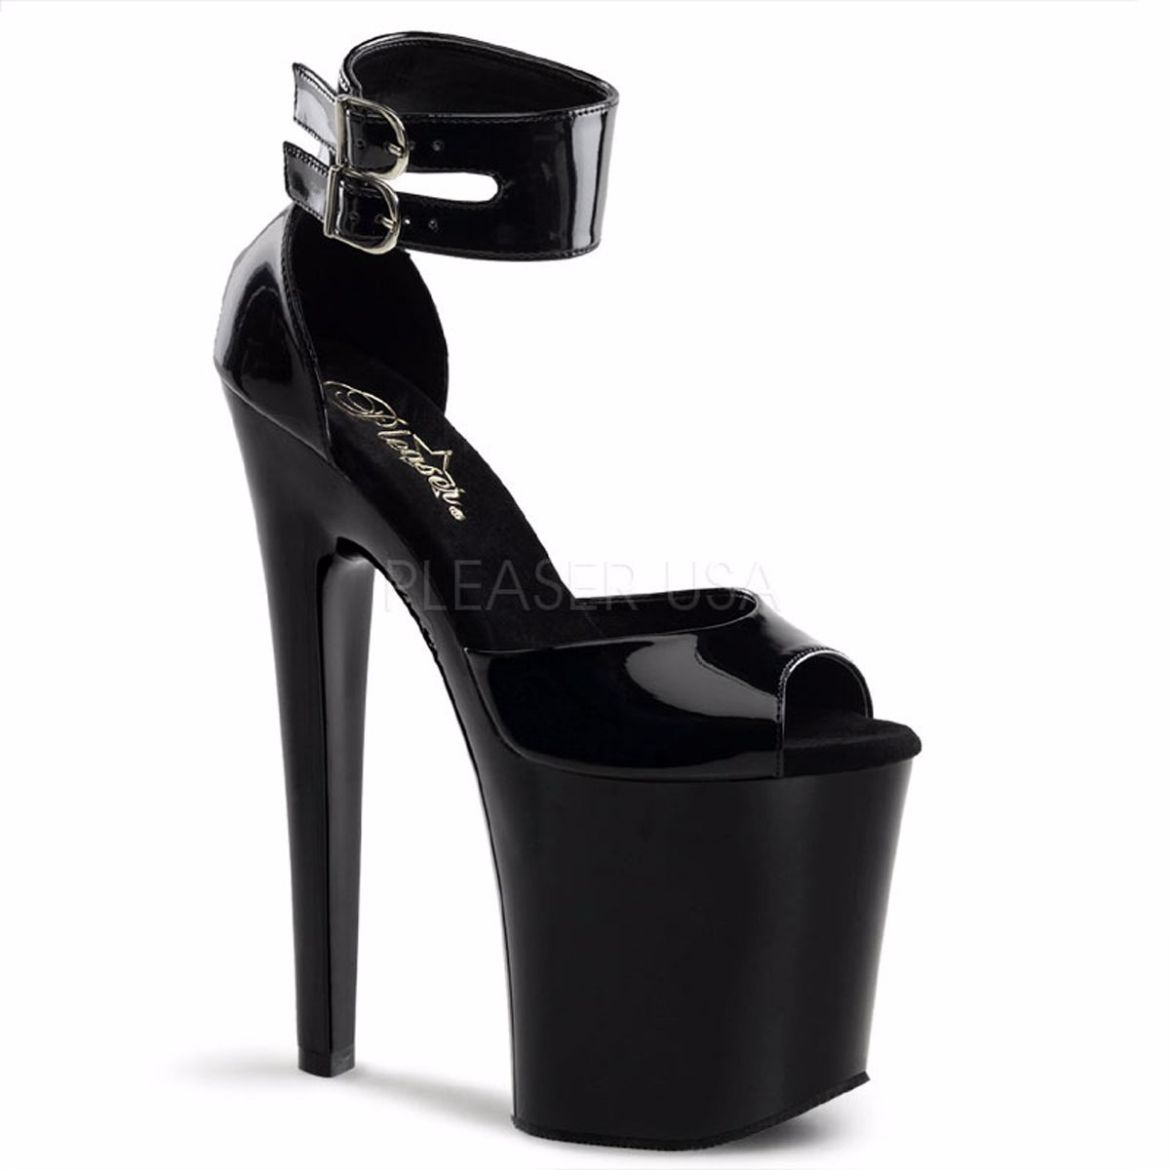 Product image of Pleaser Xtreme-875 Black Patent/Black, 8 inch (20.3 cm) Heel, 4 inch (10.2 cm) Platform Sandal Shoes